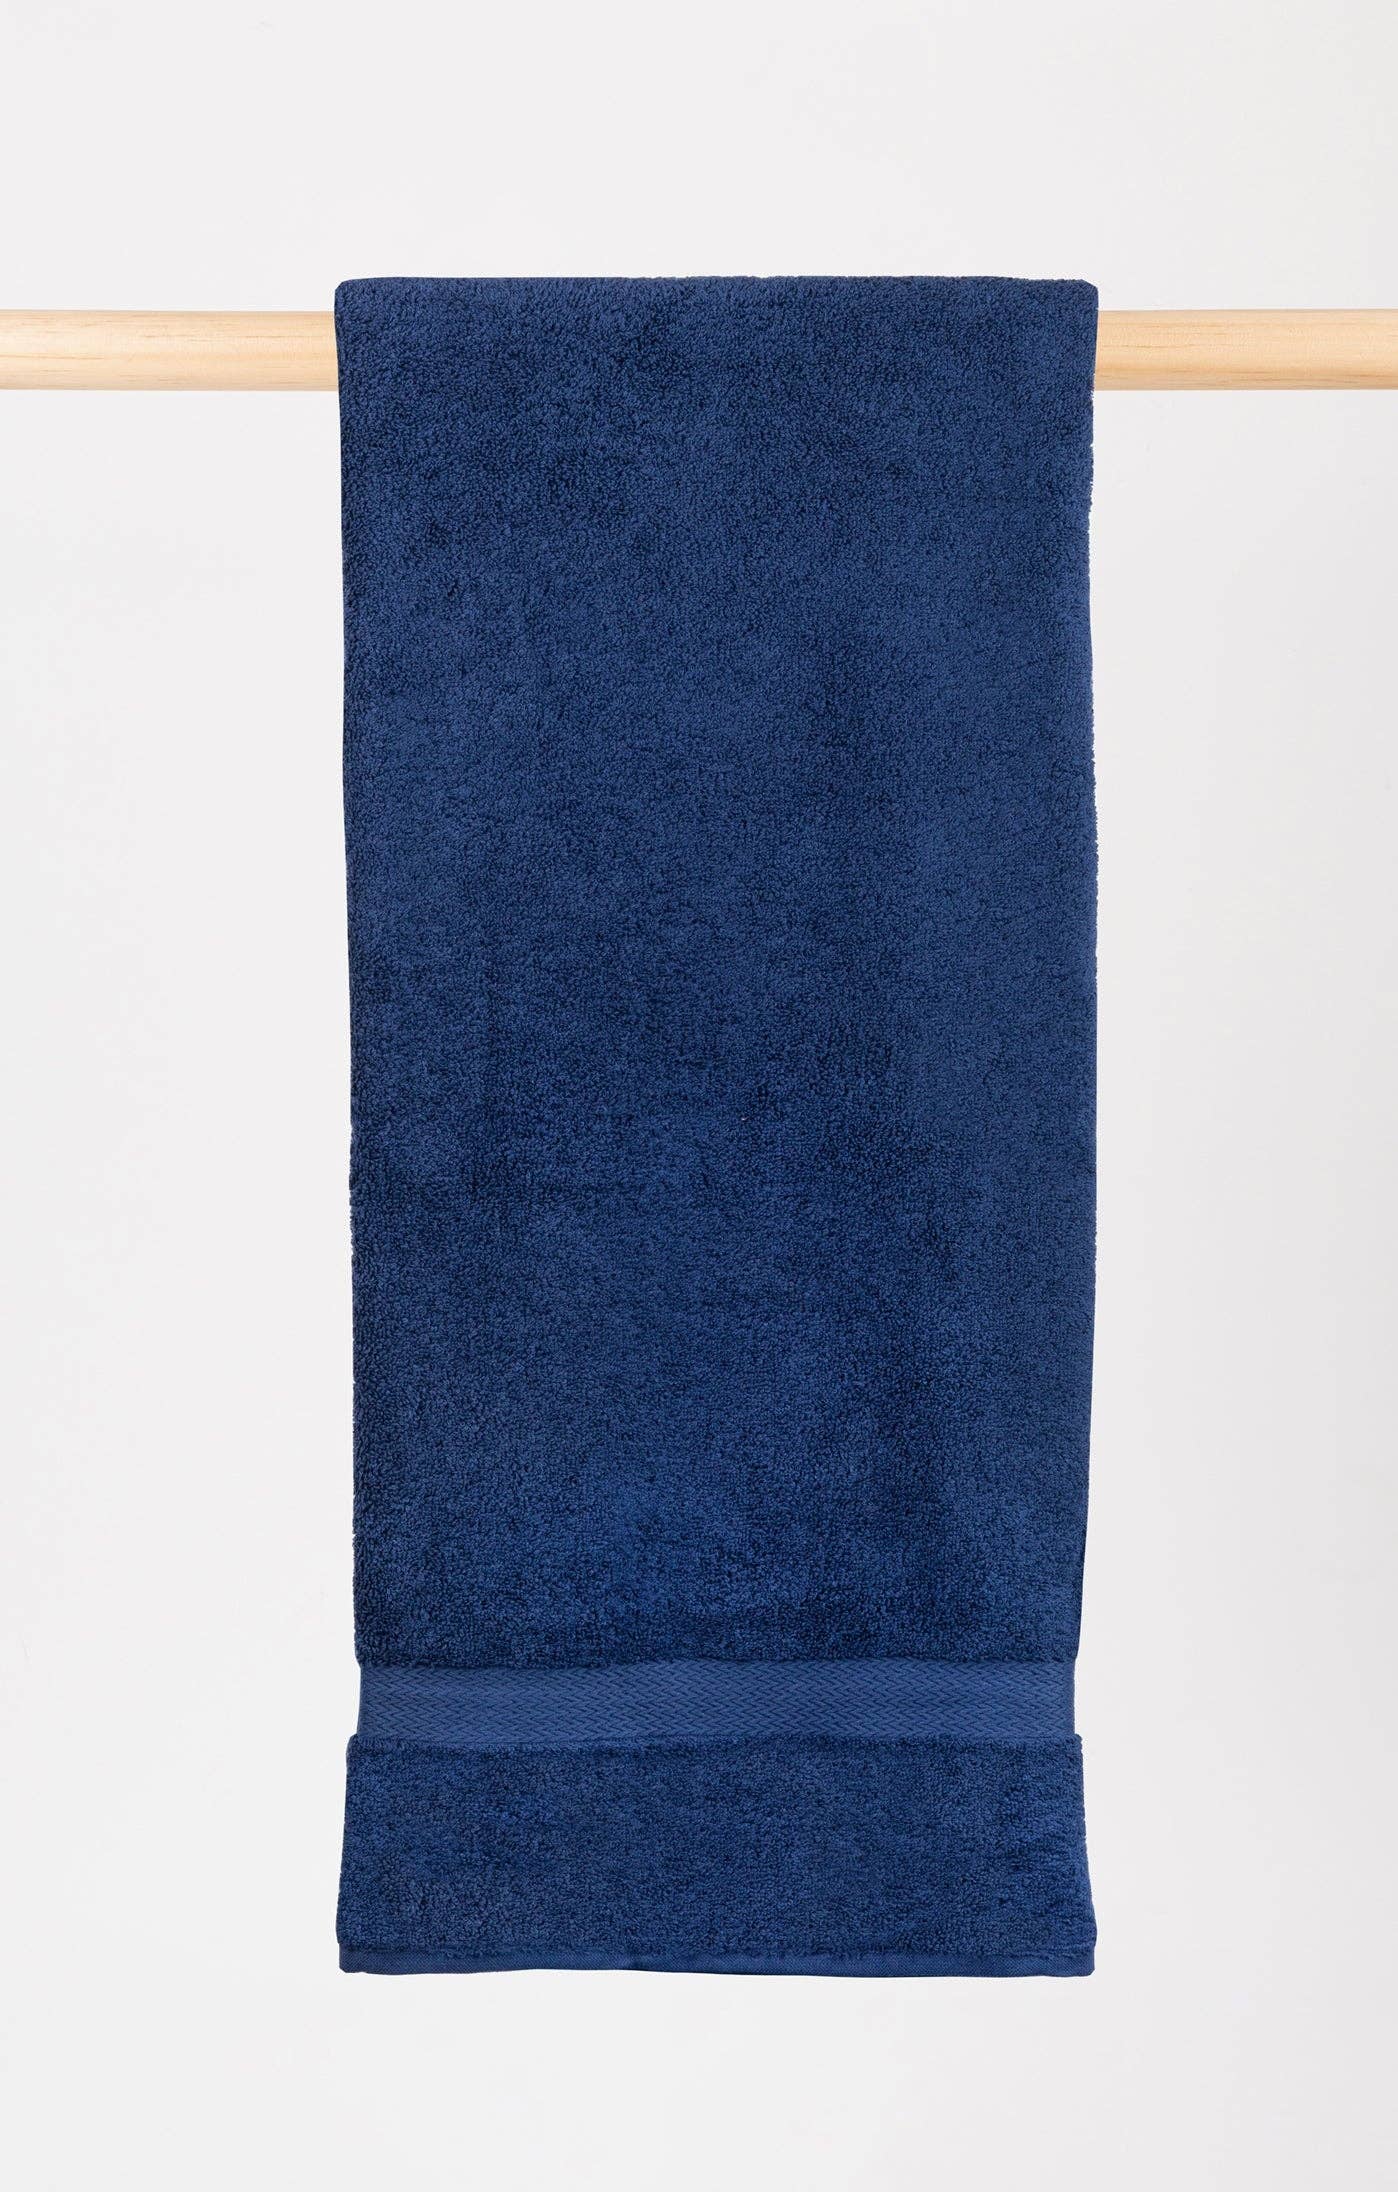 cobalt blue almonda towel hanging on a wooden rail